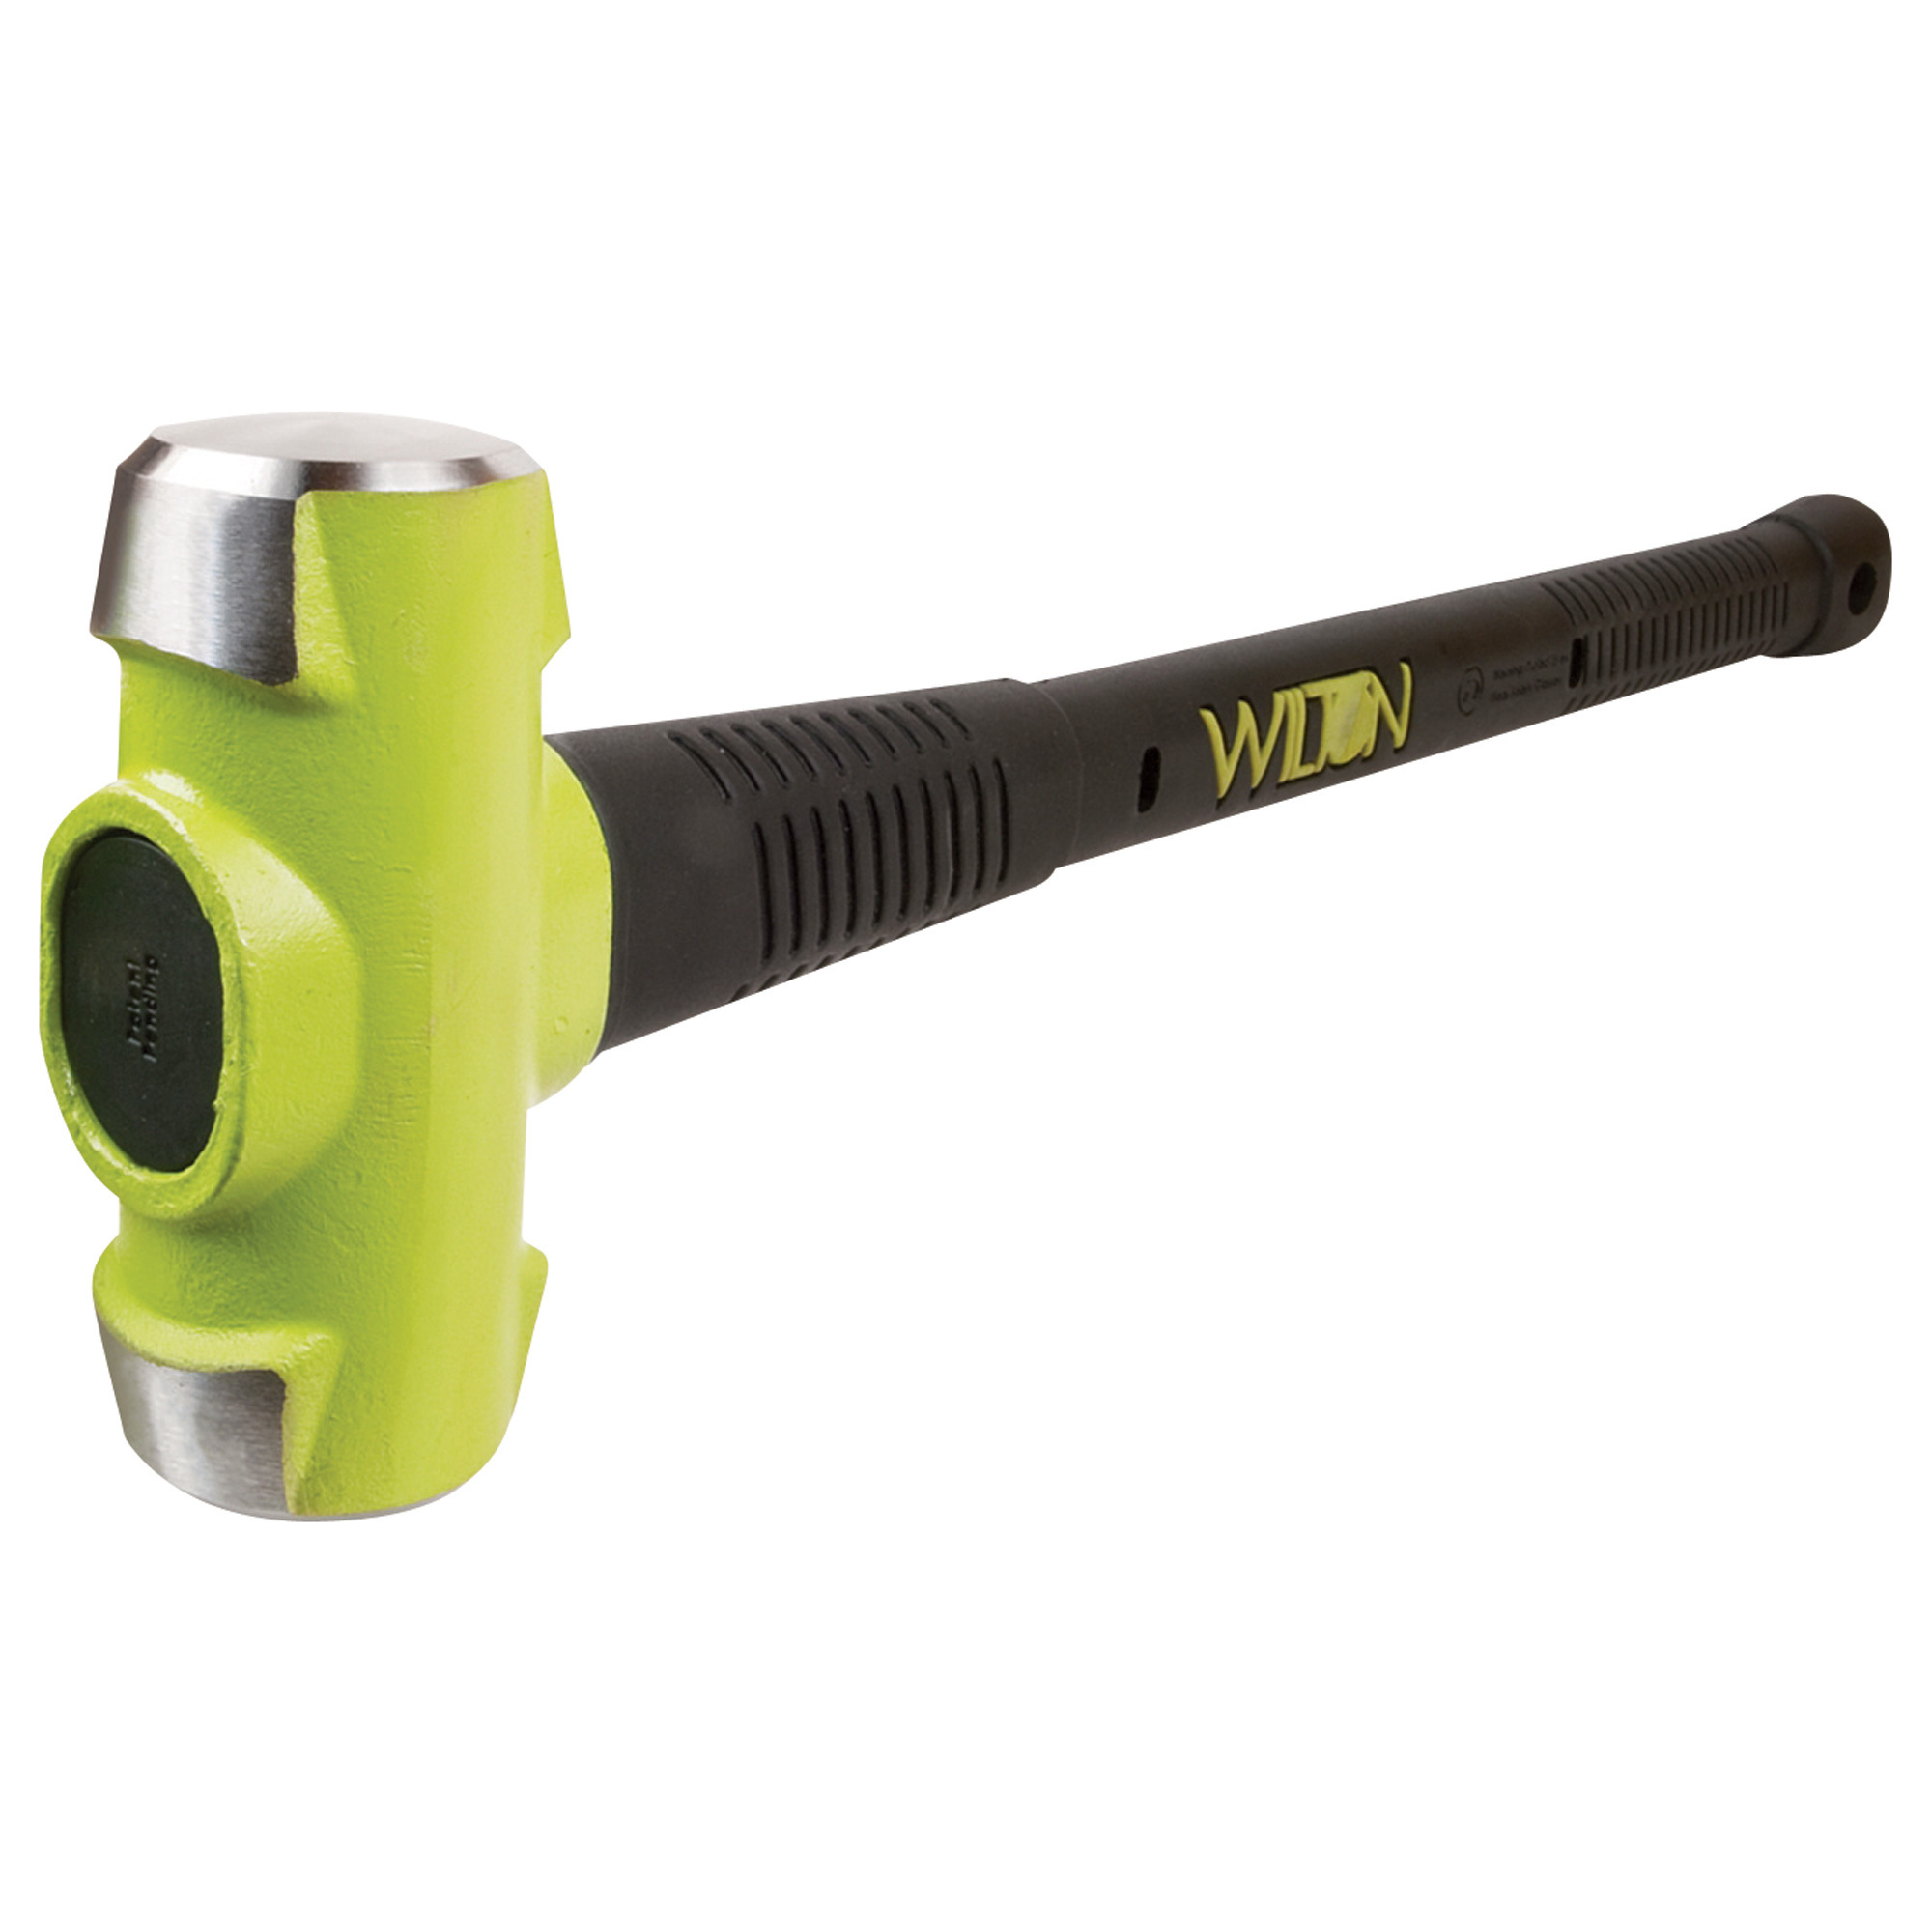 Wilton BASH Sledgehammer, 6-Lb. Head, 36Inch Handle, Model 20630